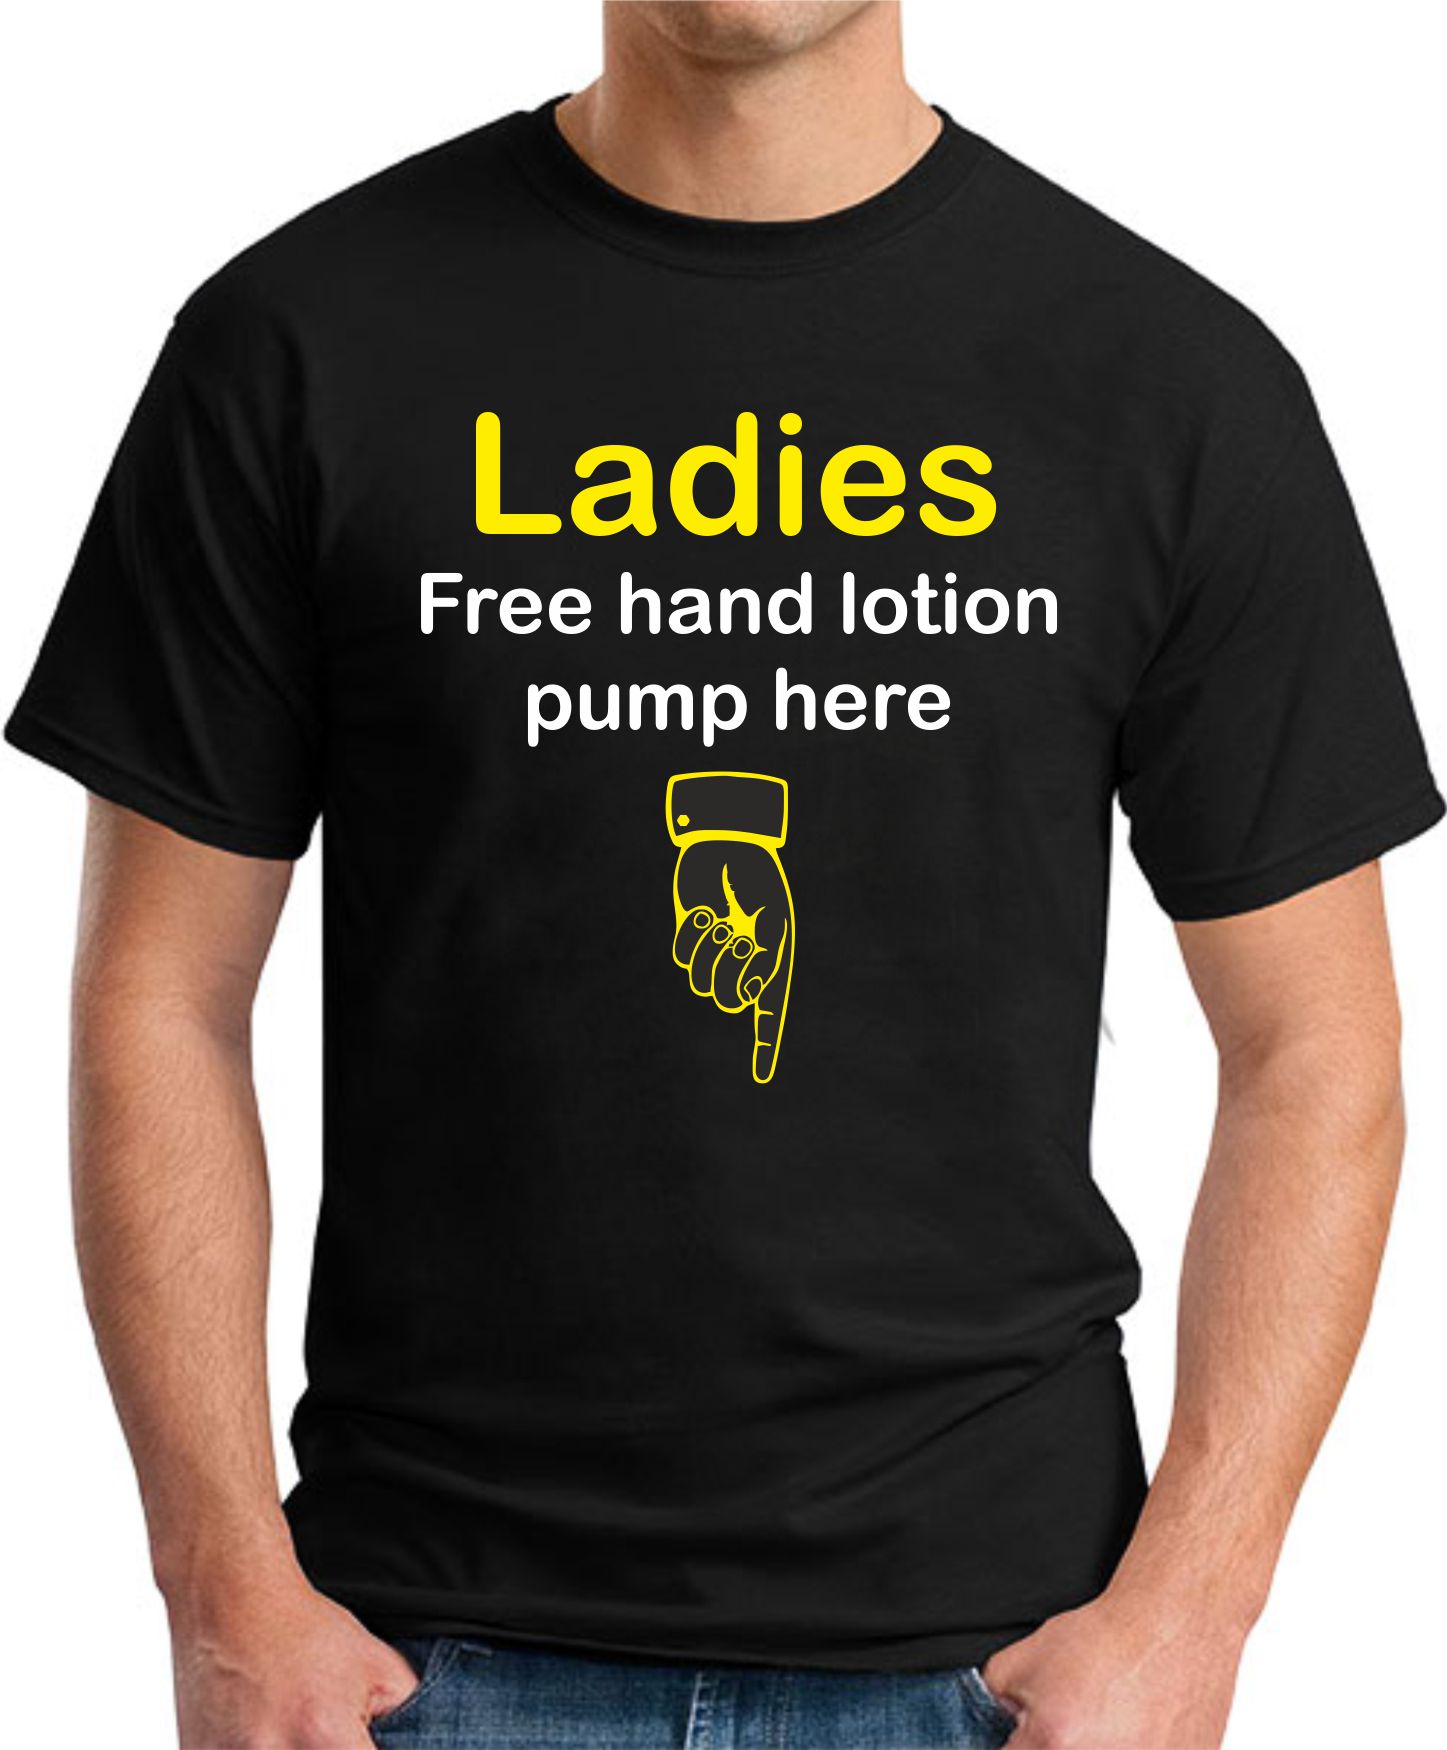 LADIES FREE HAND LOTION black